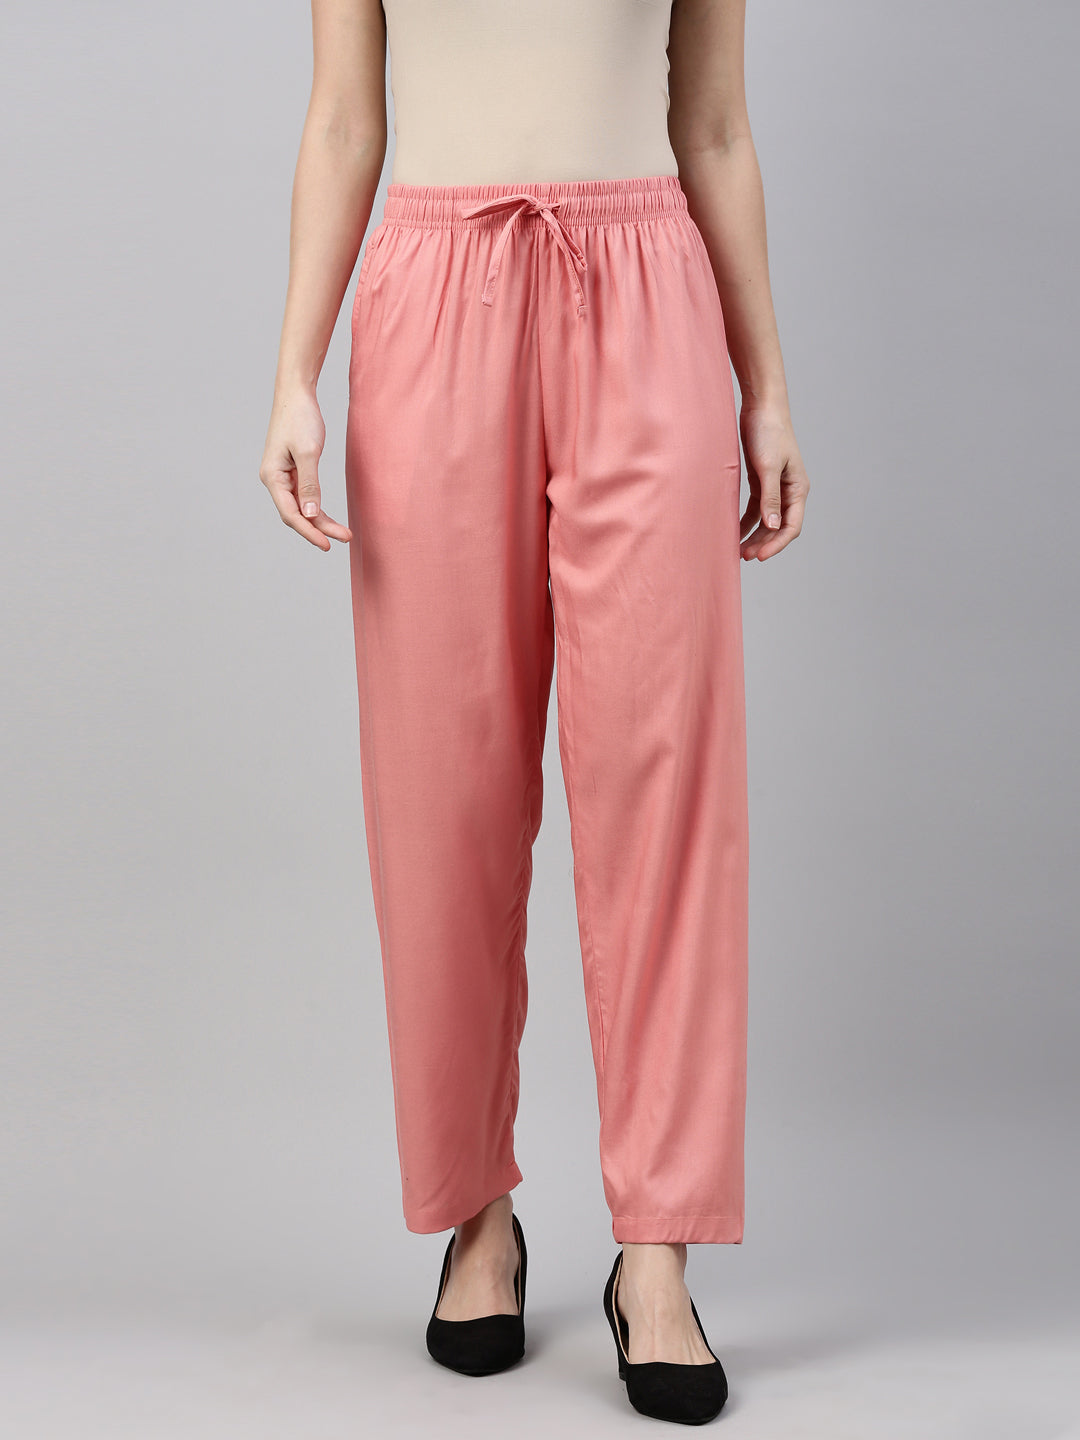 Peach Pink Women's Fashion Stretch Denim Mid Rise Shorts – Lookbook Store